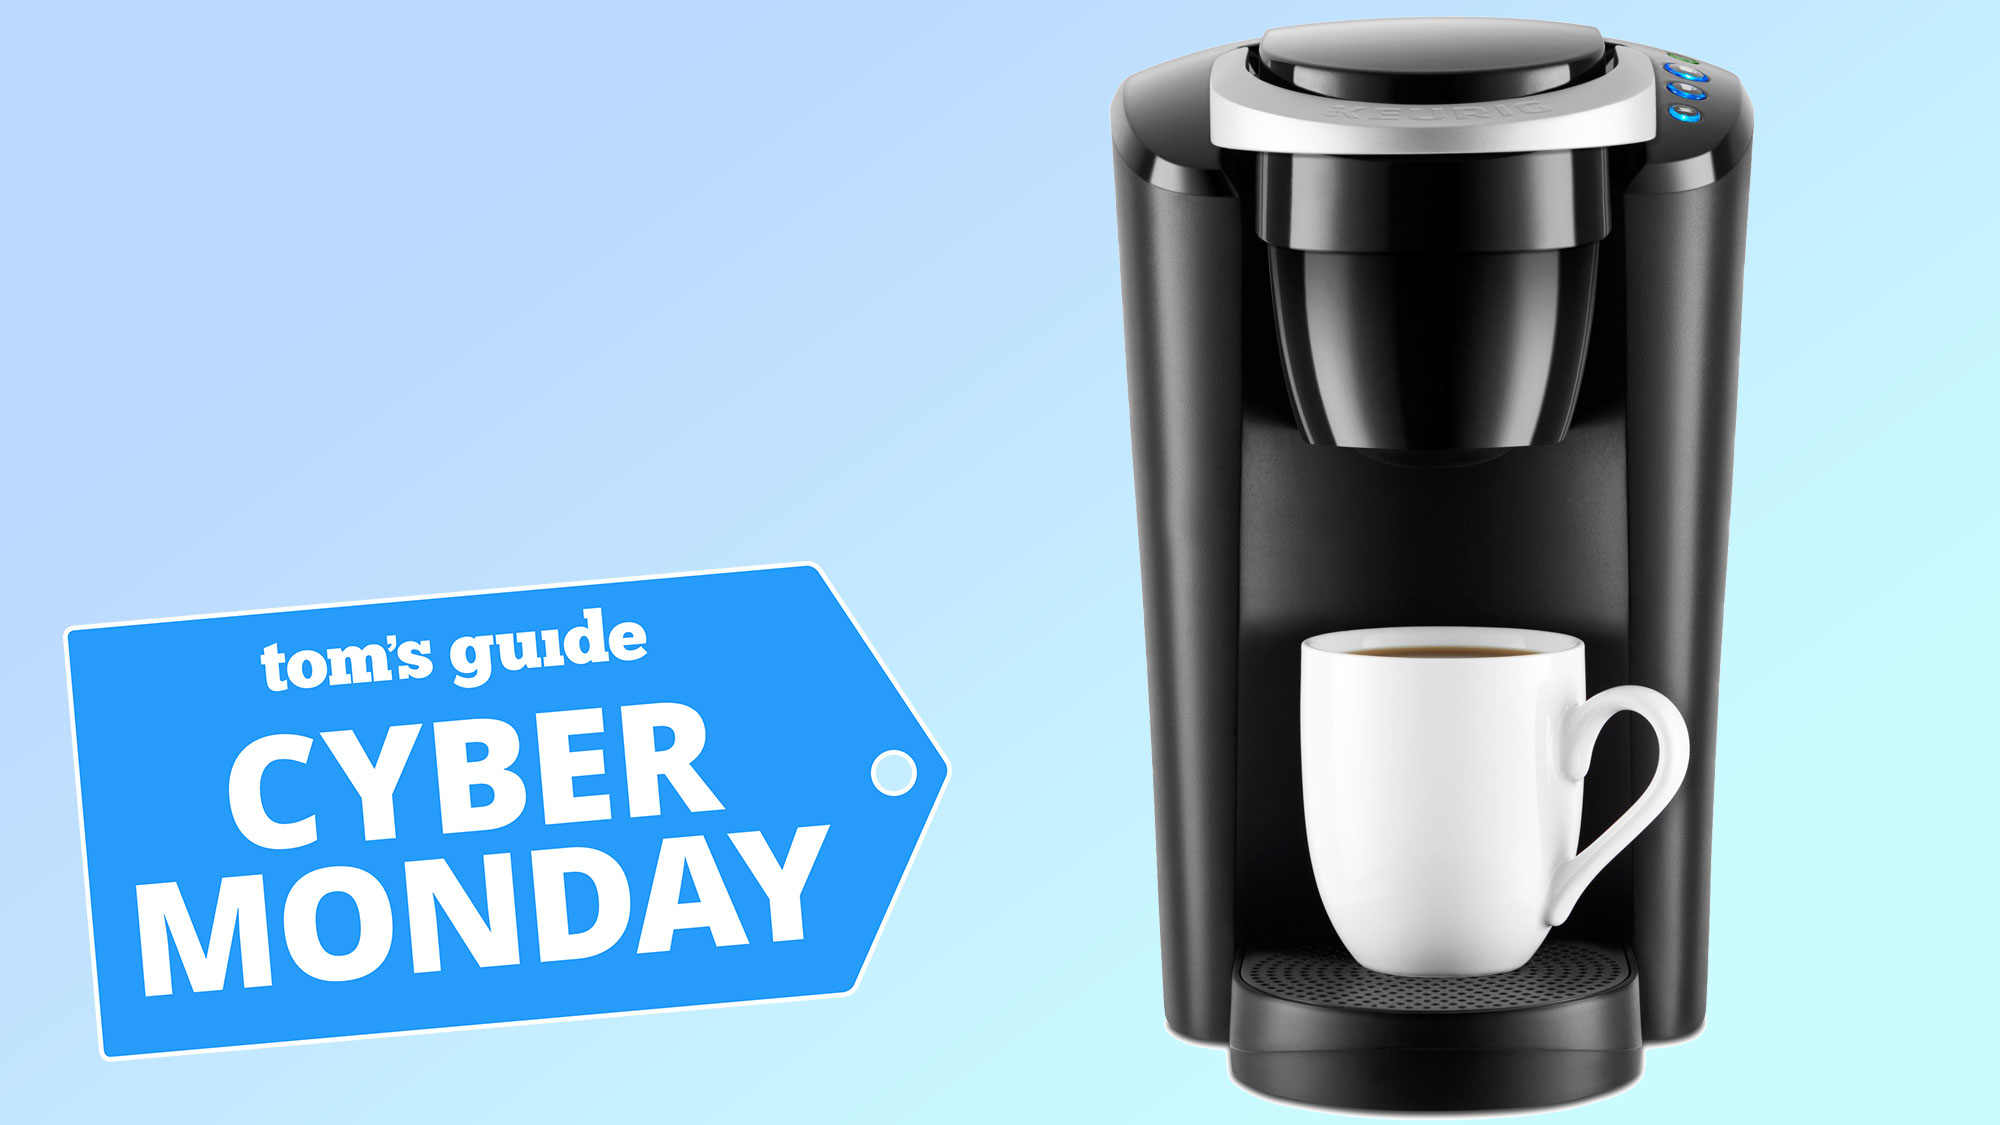 Keurig K-Compact Coffee Maker Cyber Monday Badge